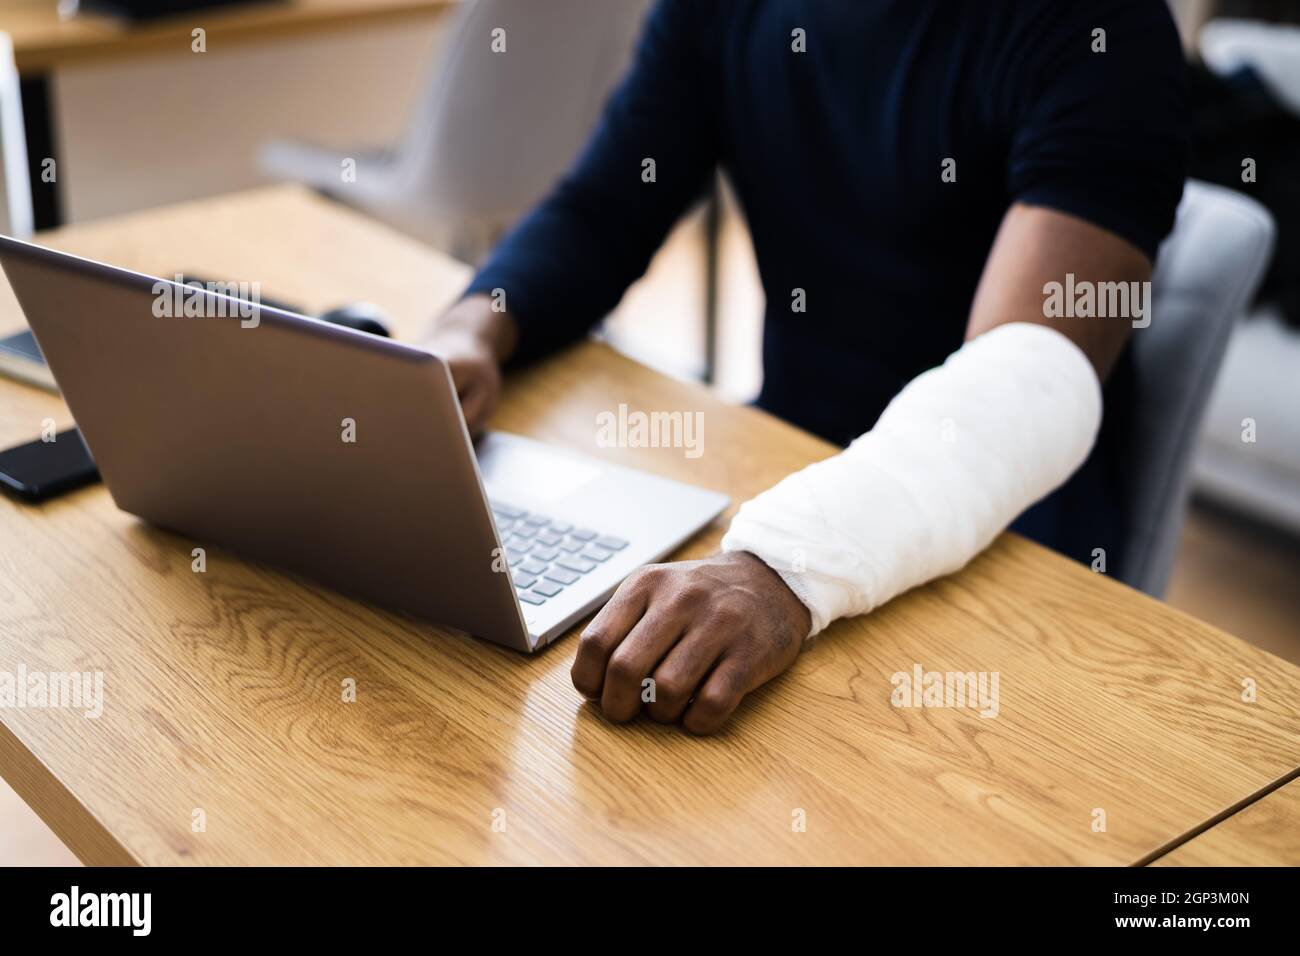 Injured Worker Compensation. Broken Arm African Man On Computer Stock Photo